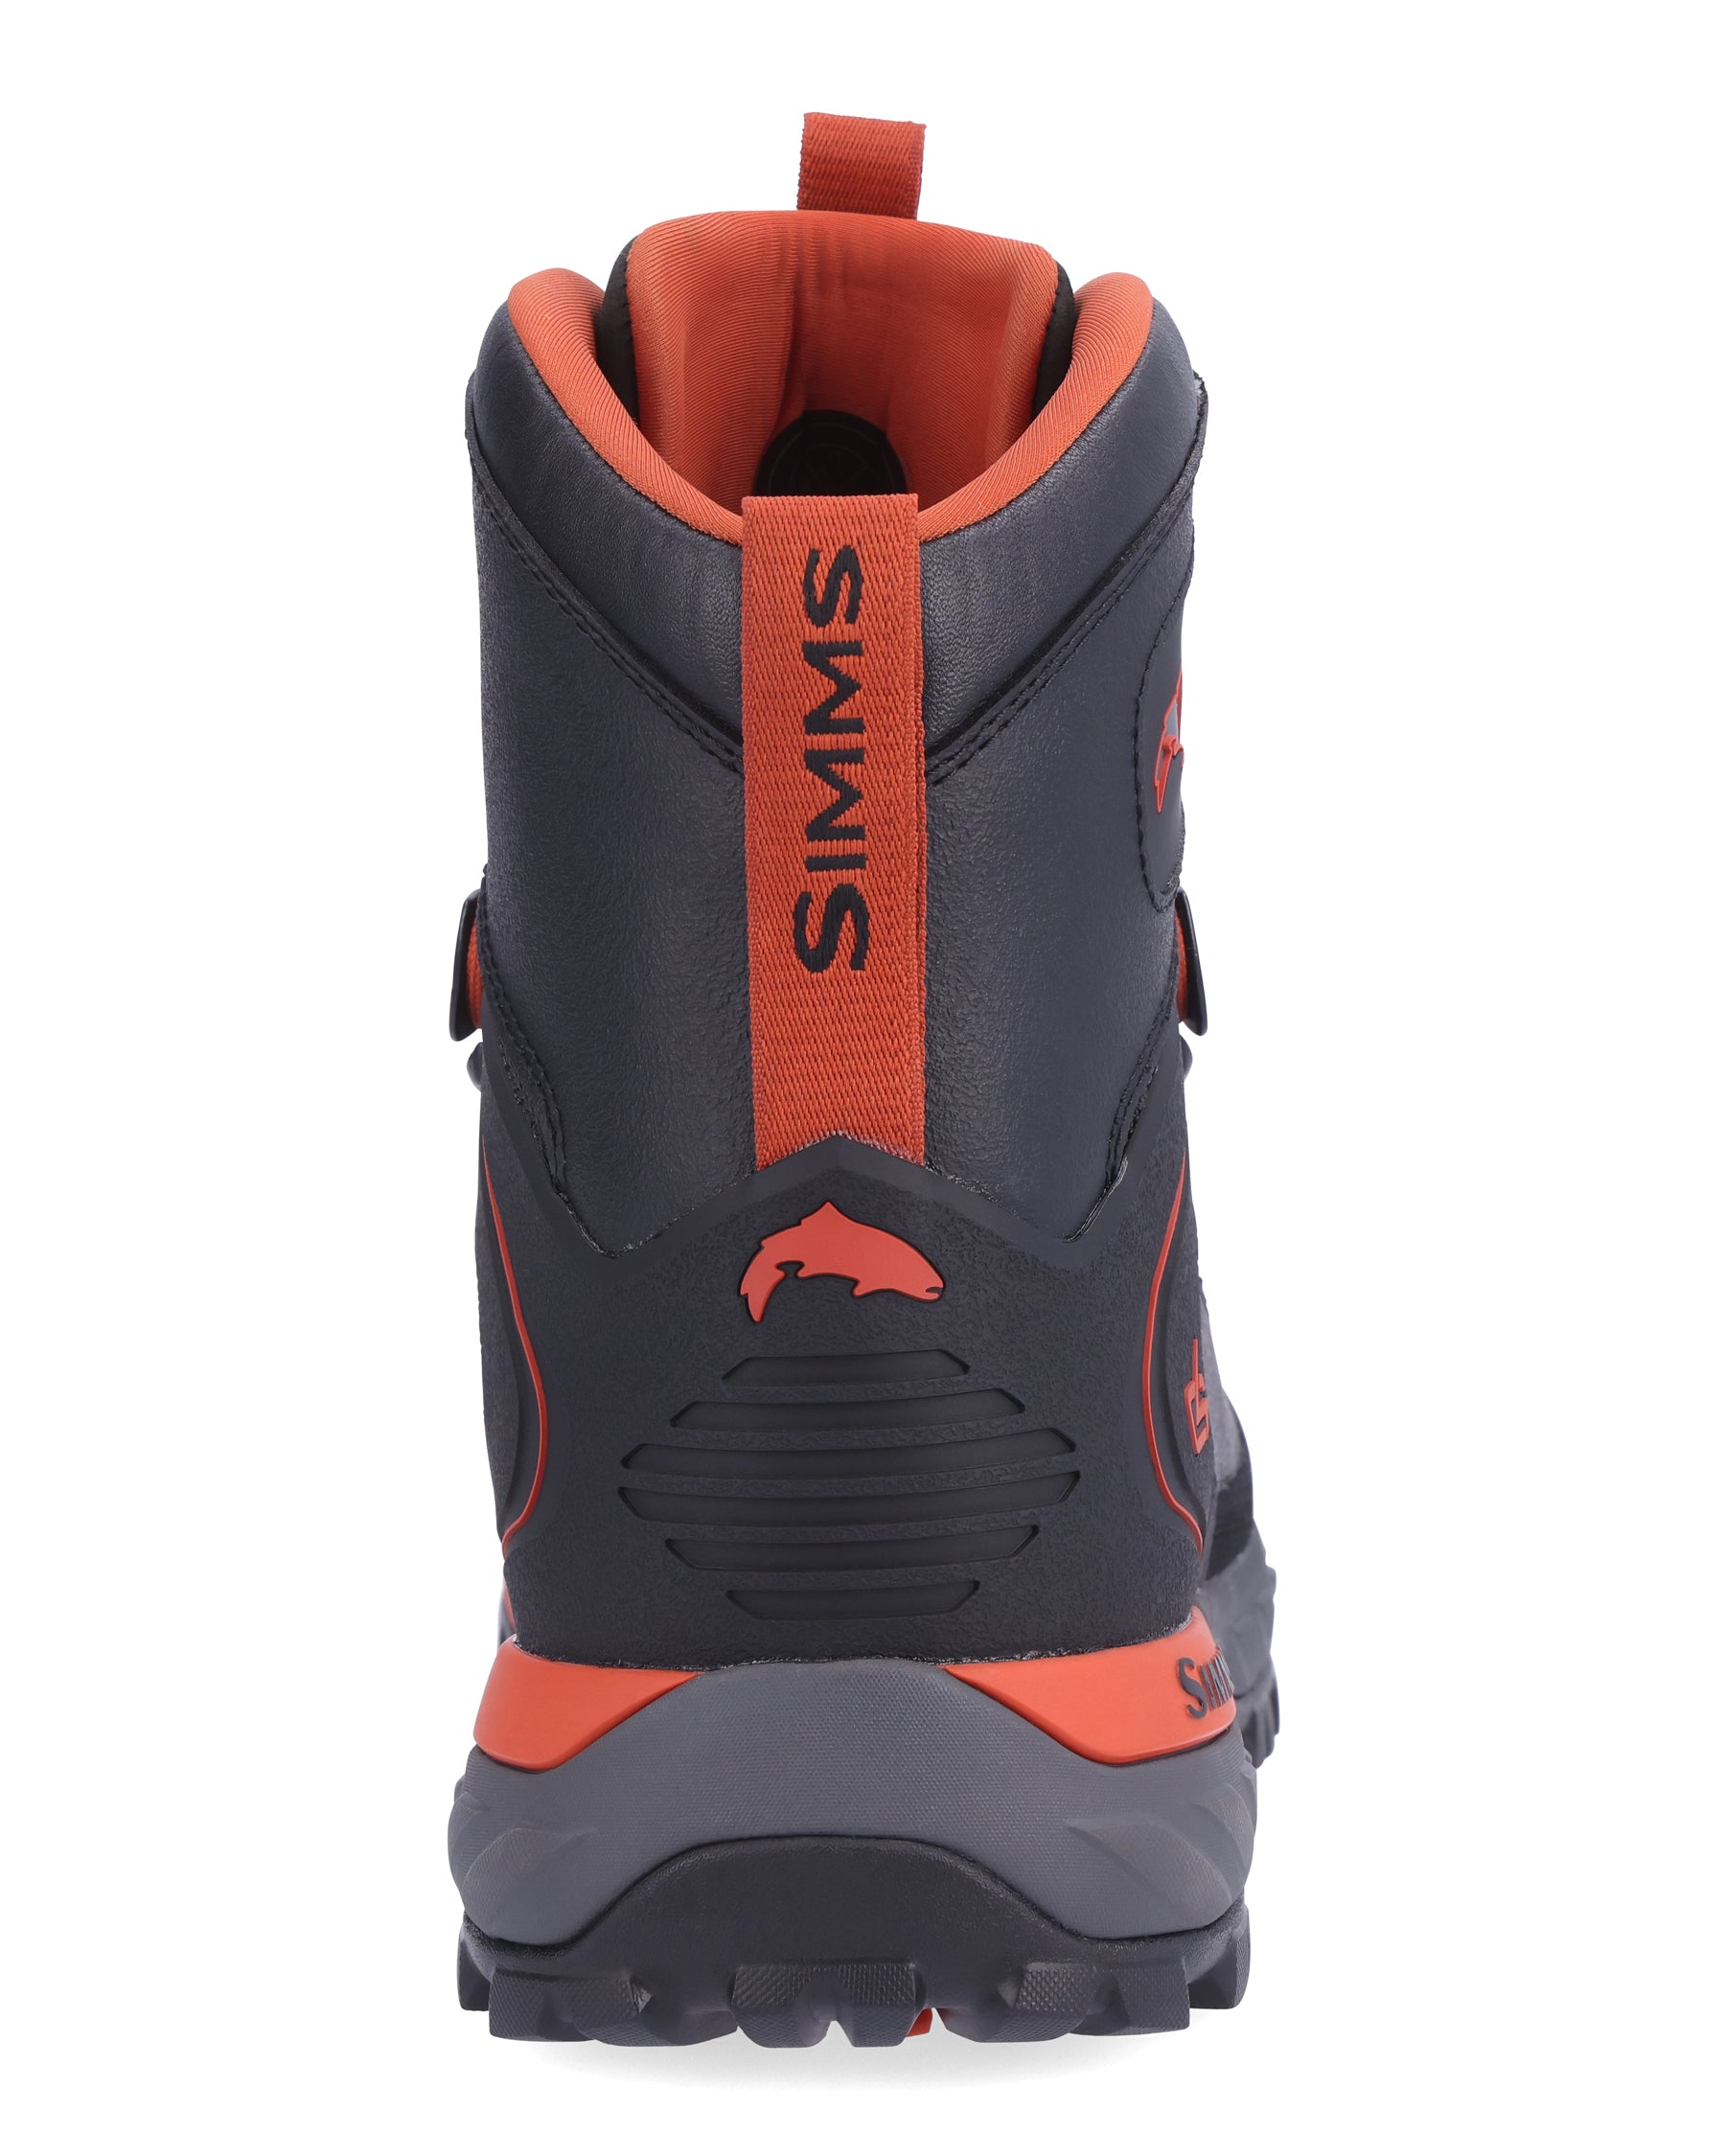 Simms Men's G4 Pro® Powerlock Wading Boot - Vibram